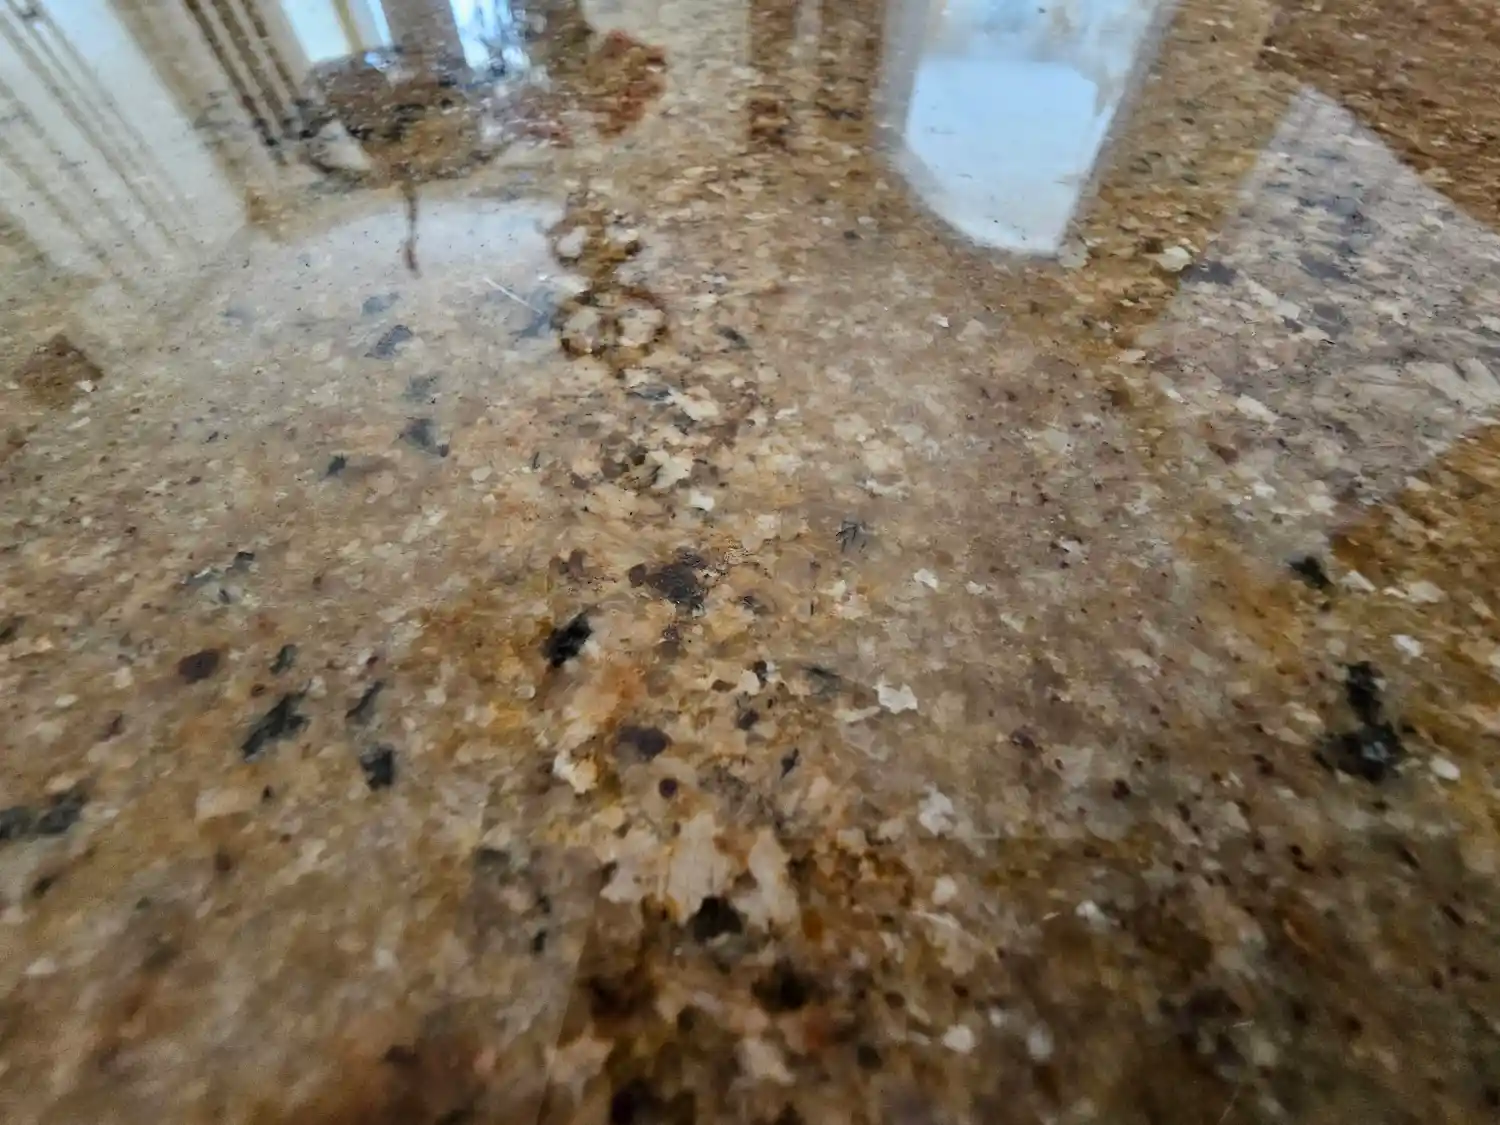 Kitchen island granite countertop.